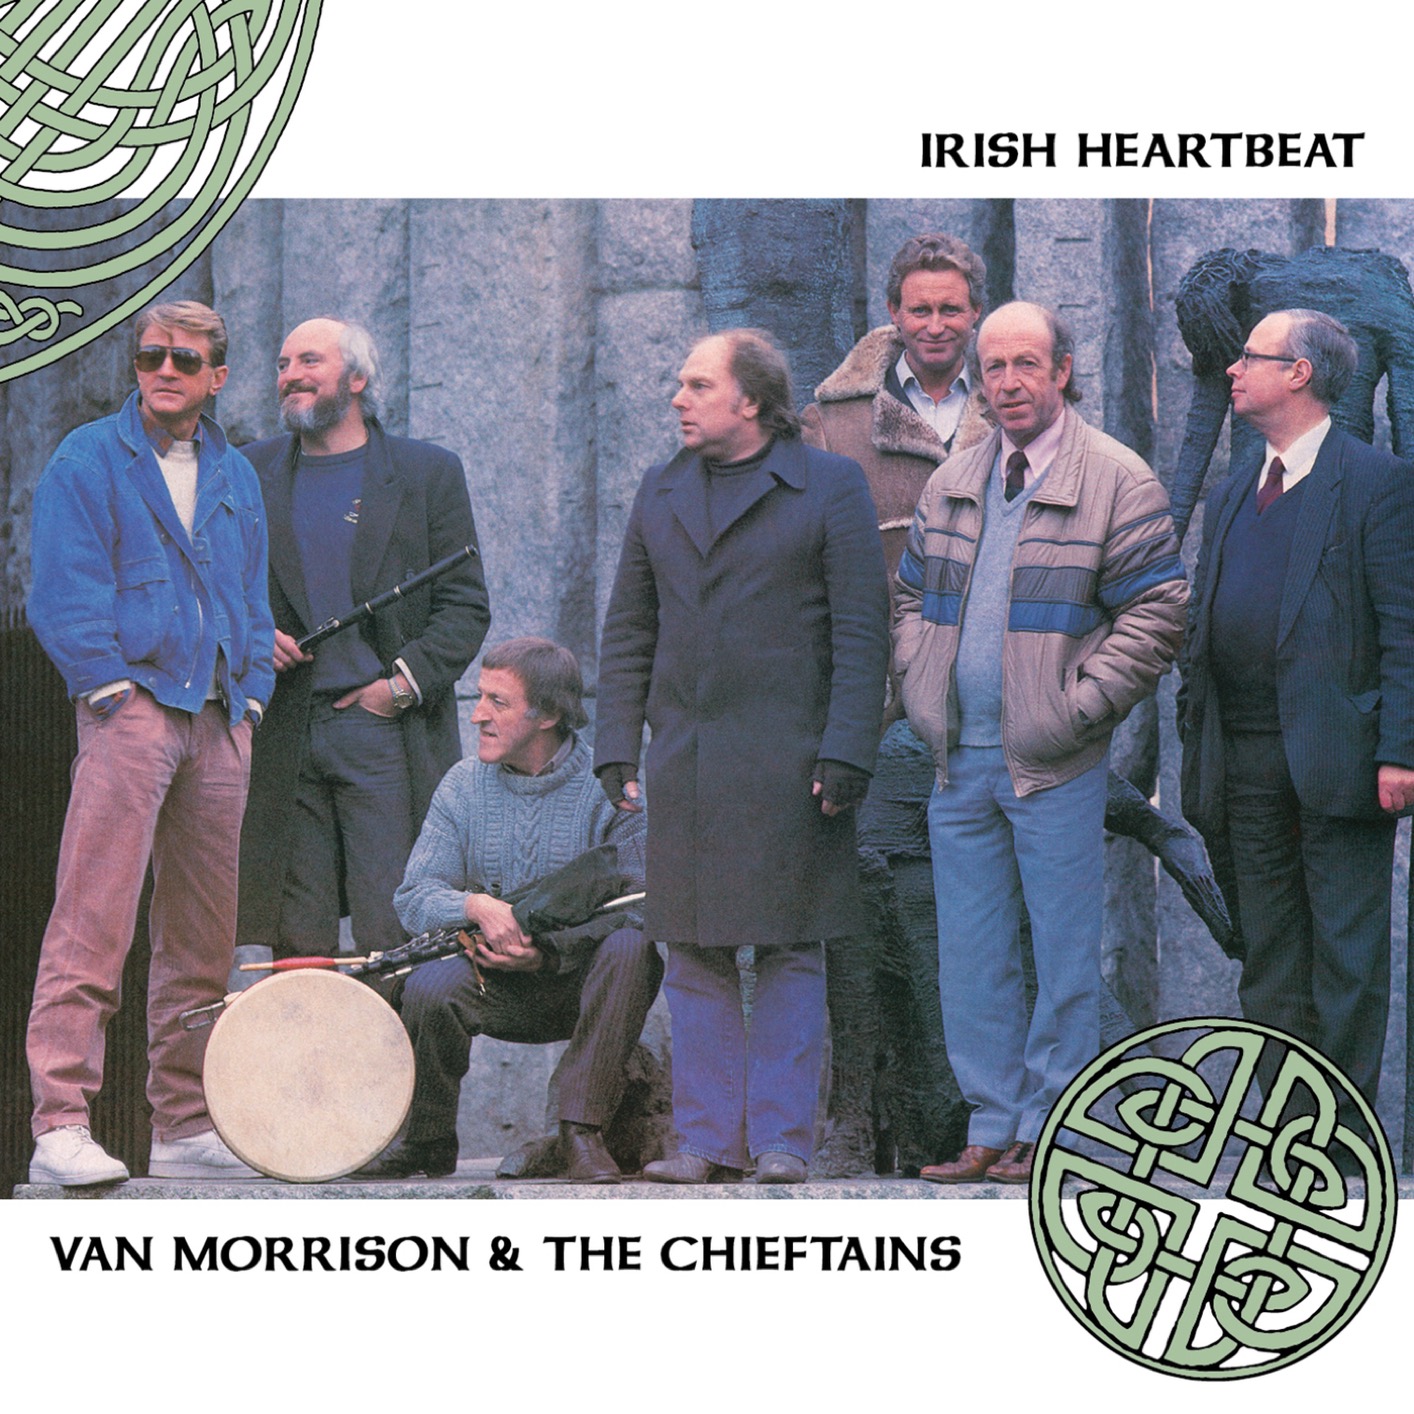 Van Morrison & The Chieftains – Irish Heartbeat (Remastered) (1988/2020) [FLAC 24bit/96kHz]